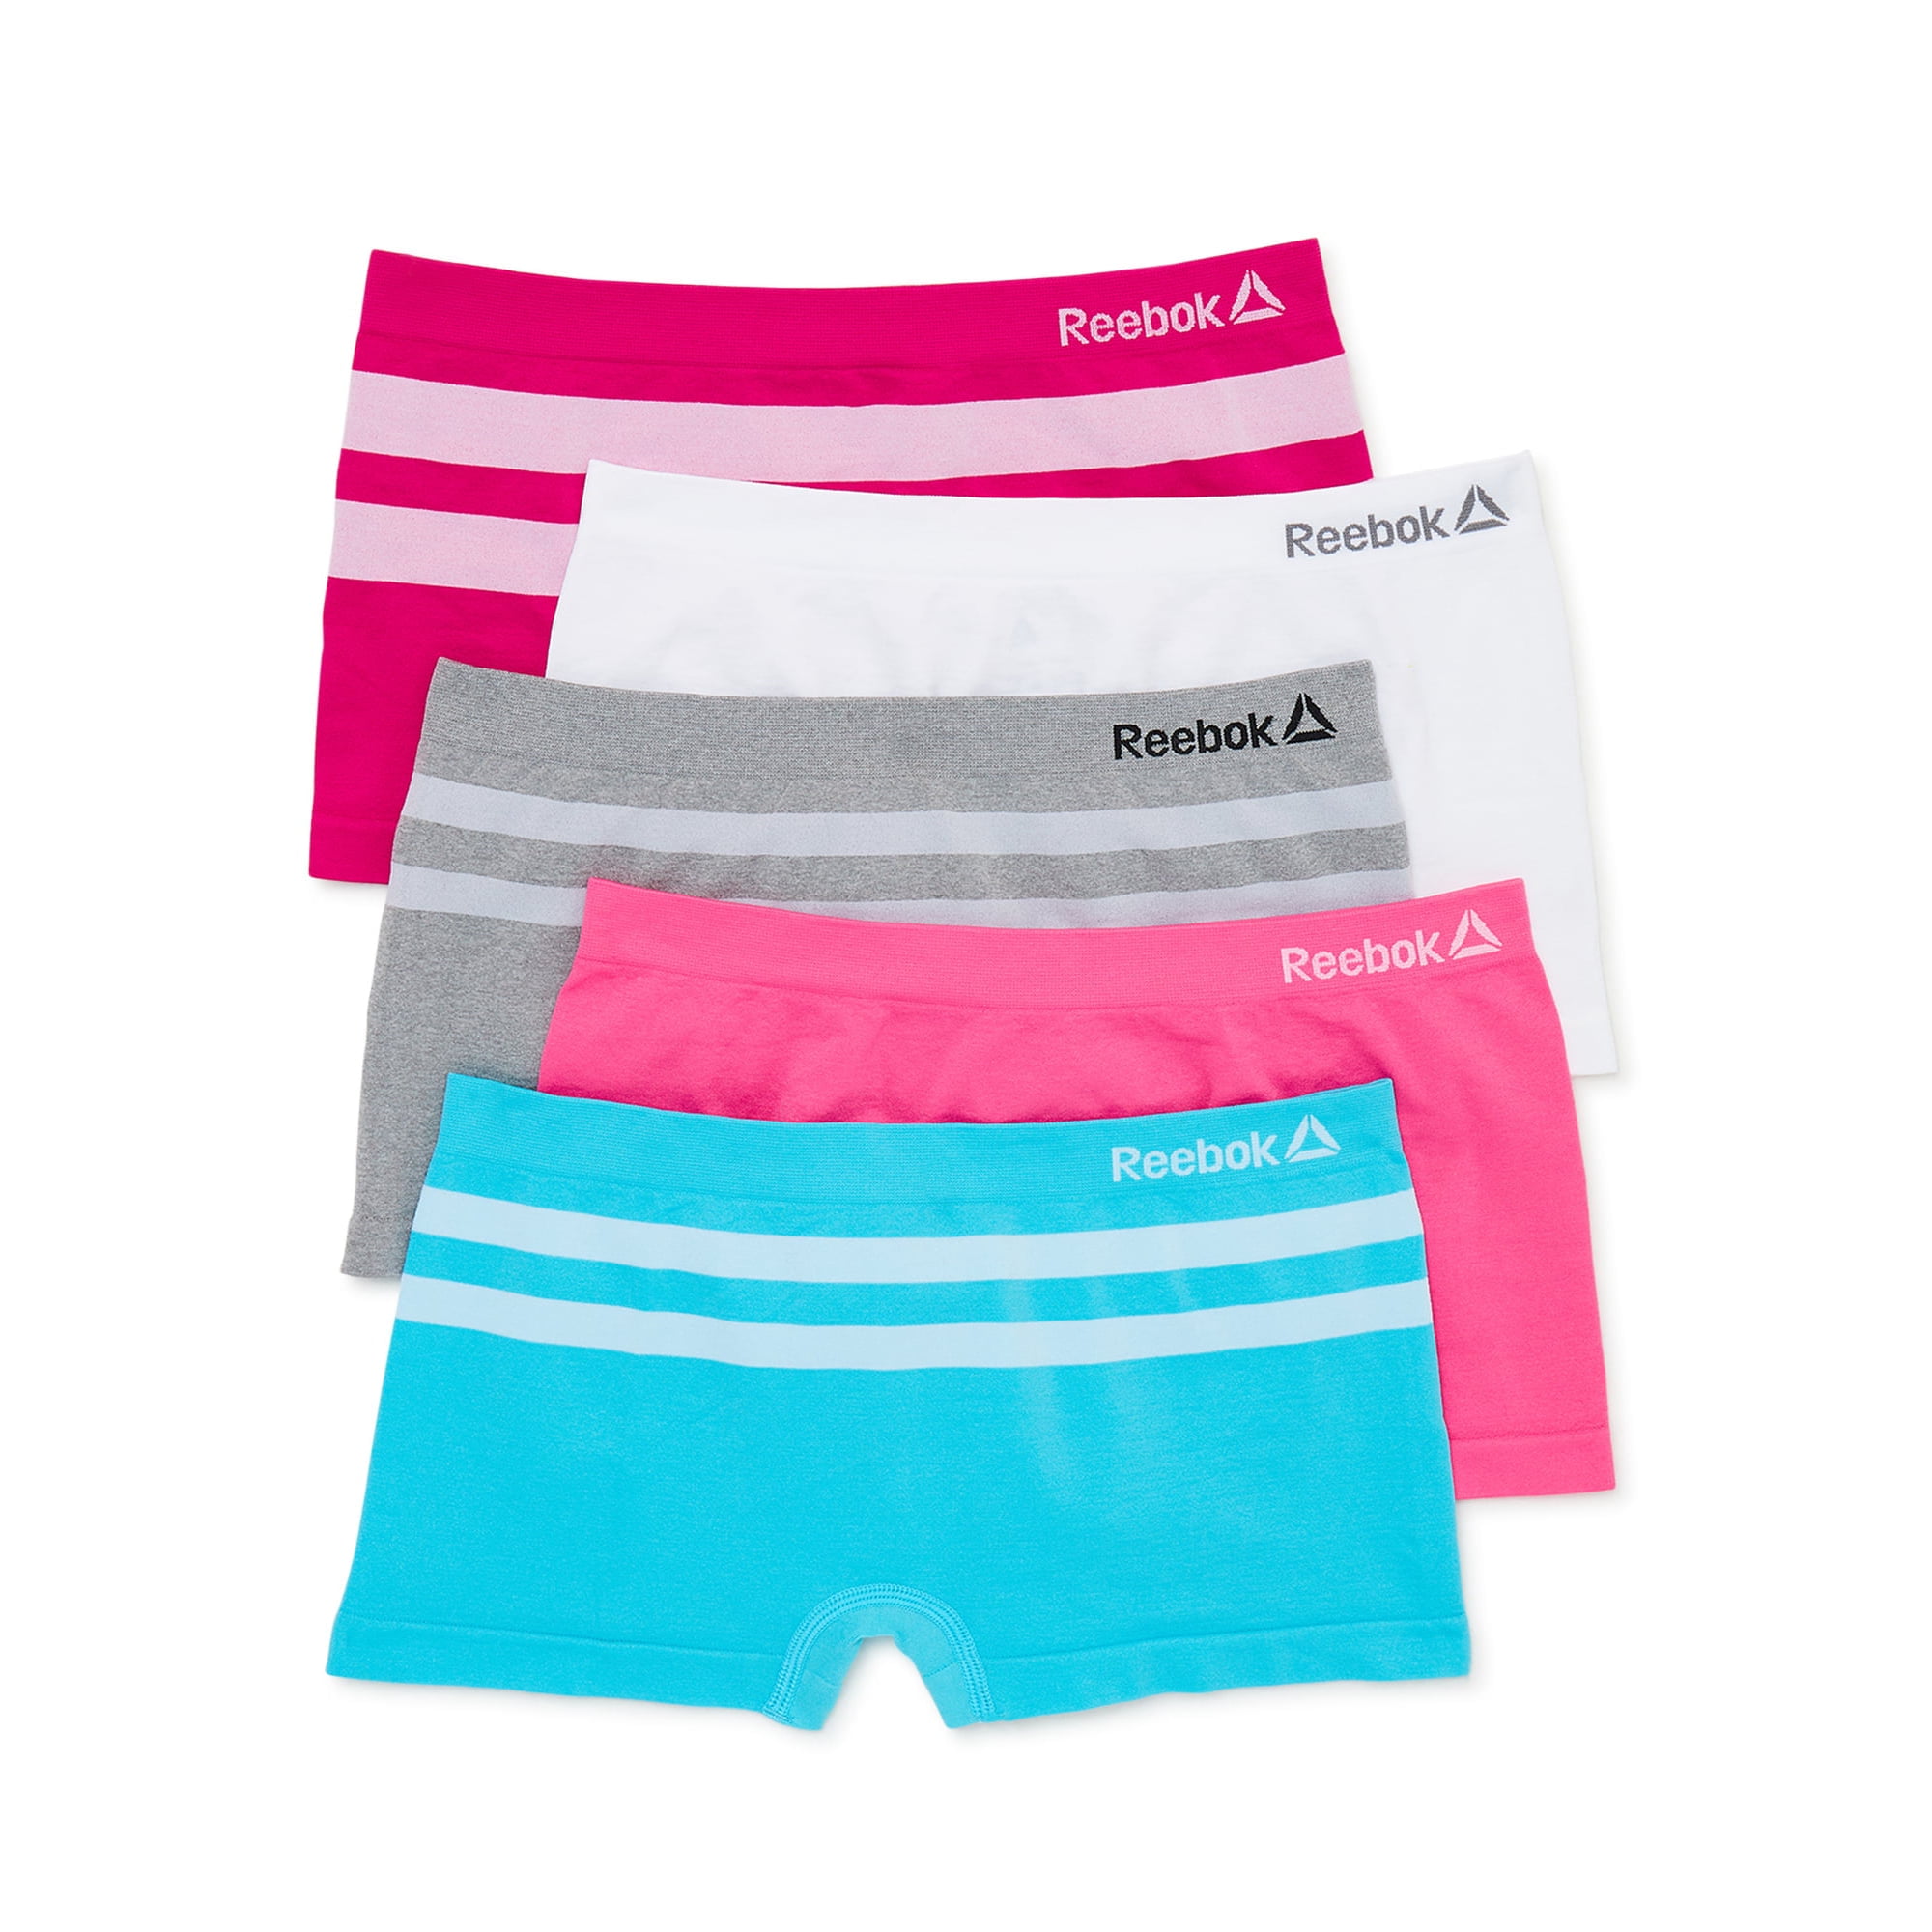 Reebok Women’s Underwear – Seamless High Waist Brief Panties (5 Pack)  Navy/Grey/White/Pink, Size Large